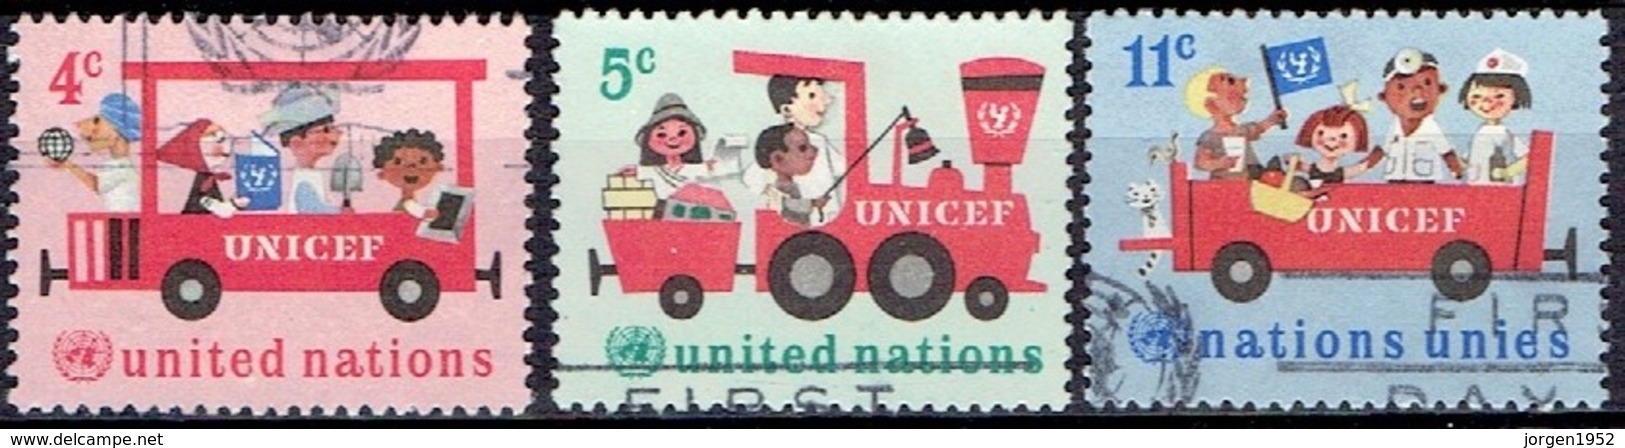 UNITED NATIONS # NEW YORK FROM 1966 STAMPWORLD 171-73 - Gebruikt